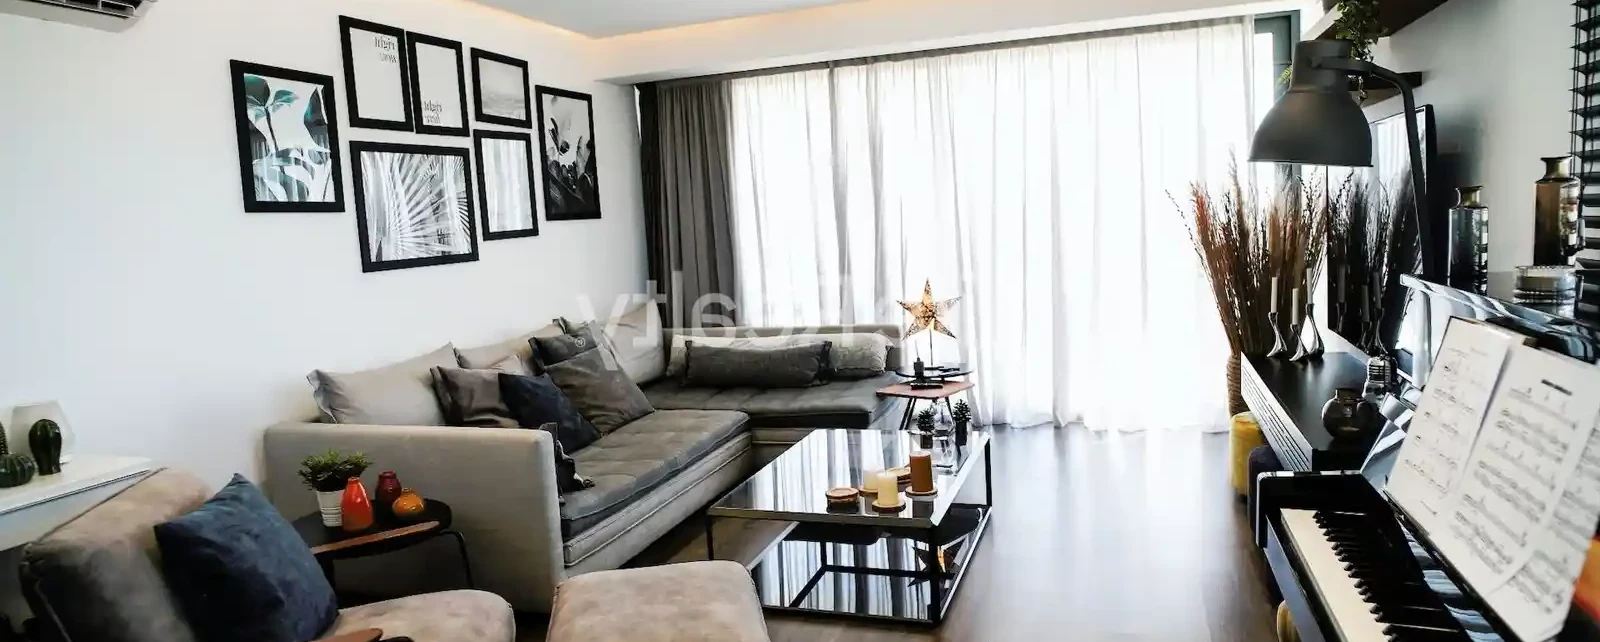 2-bedroom penthouse fоr sаle €475.000, image 1